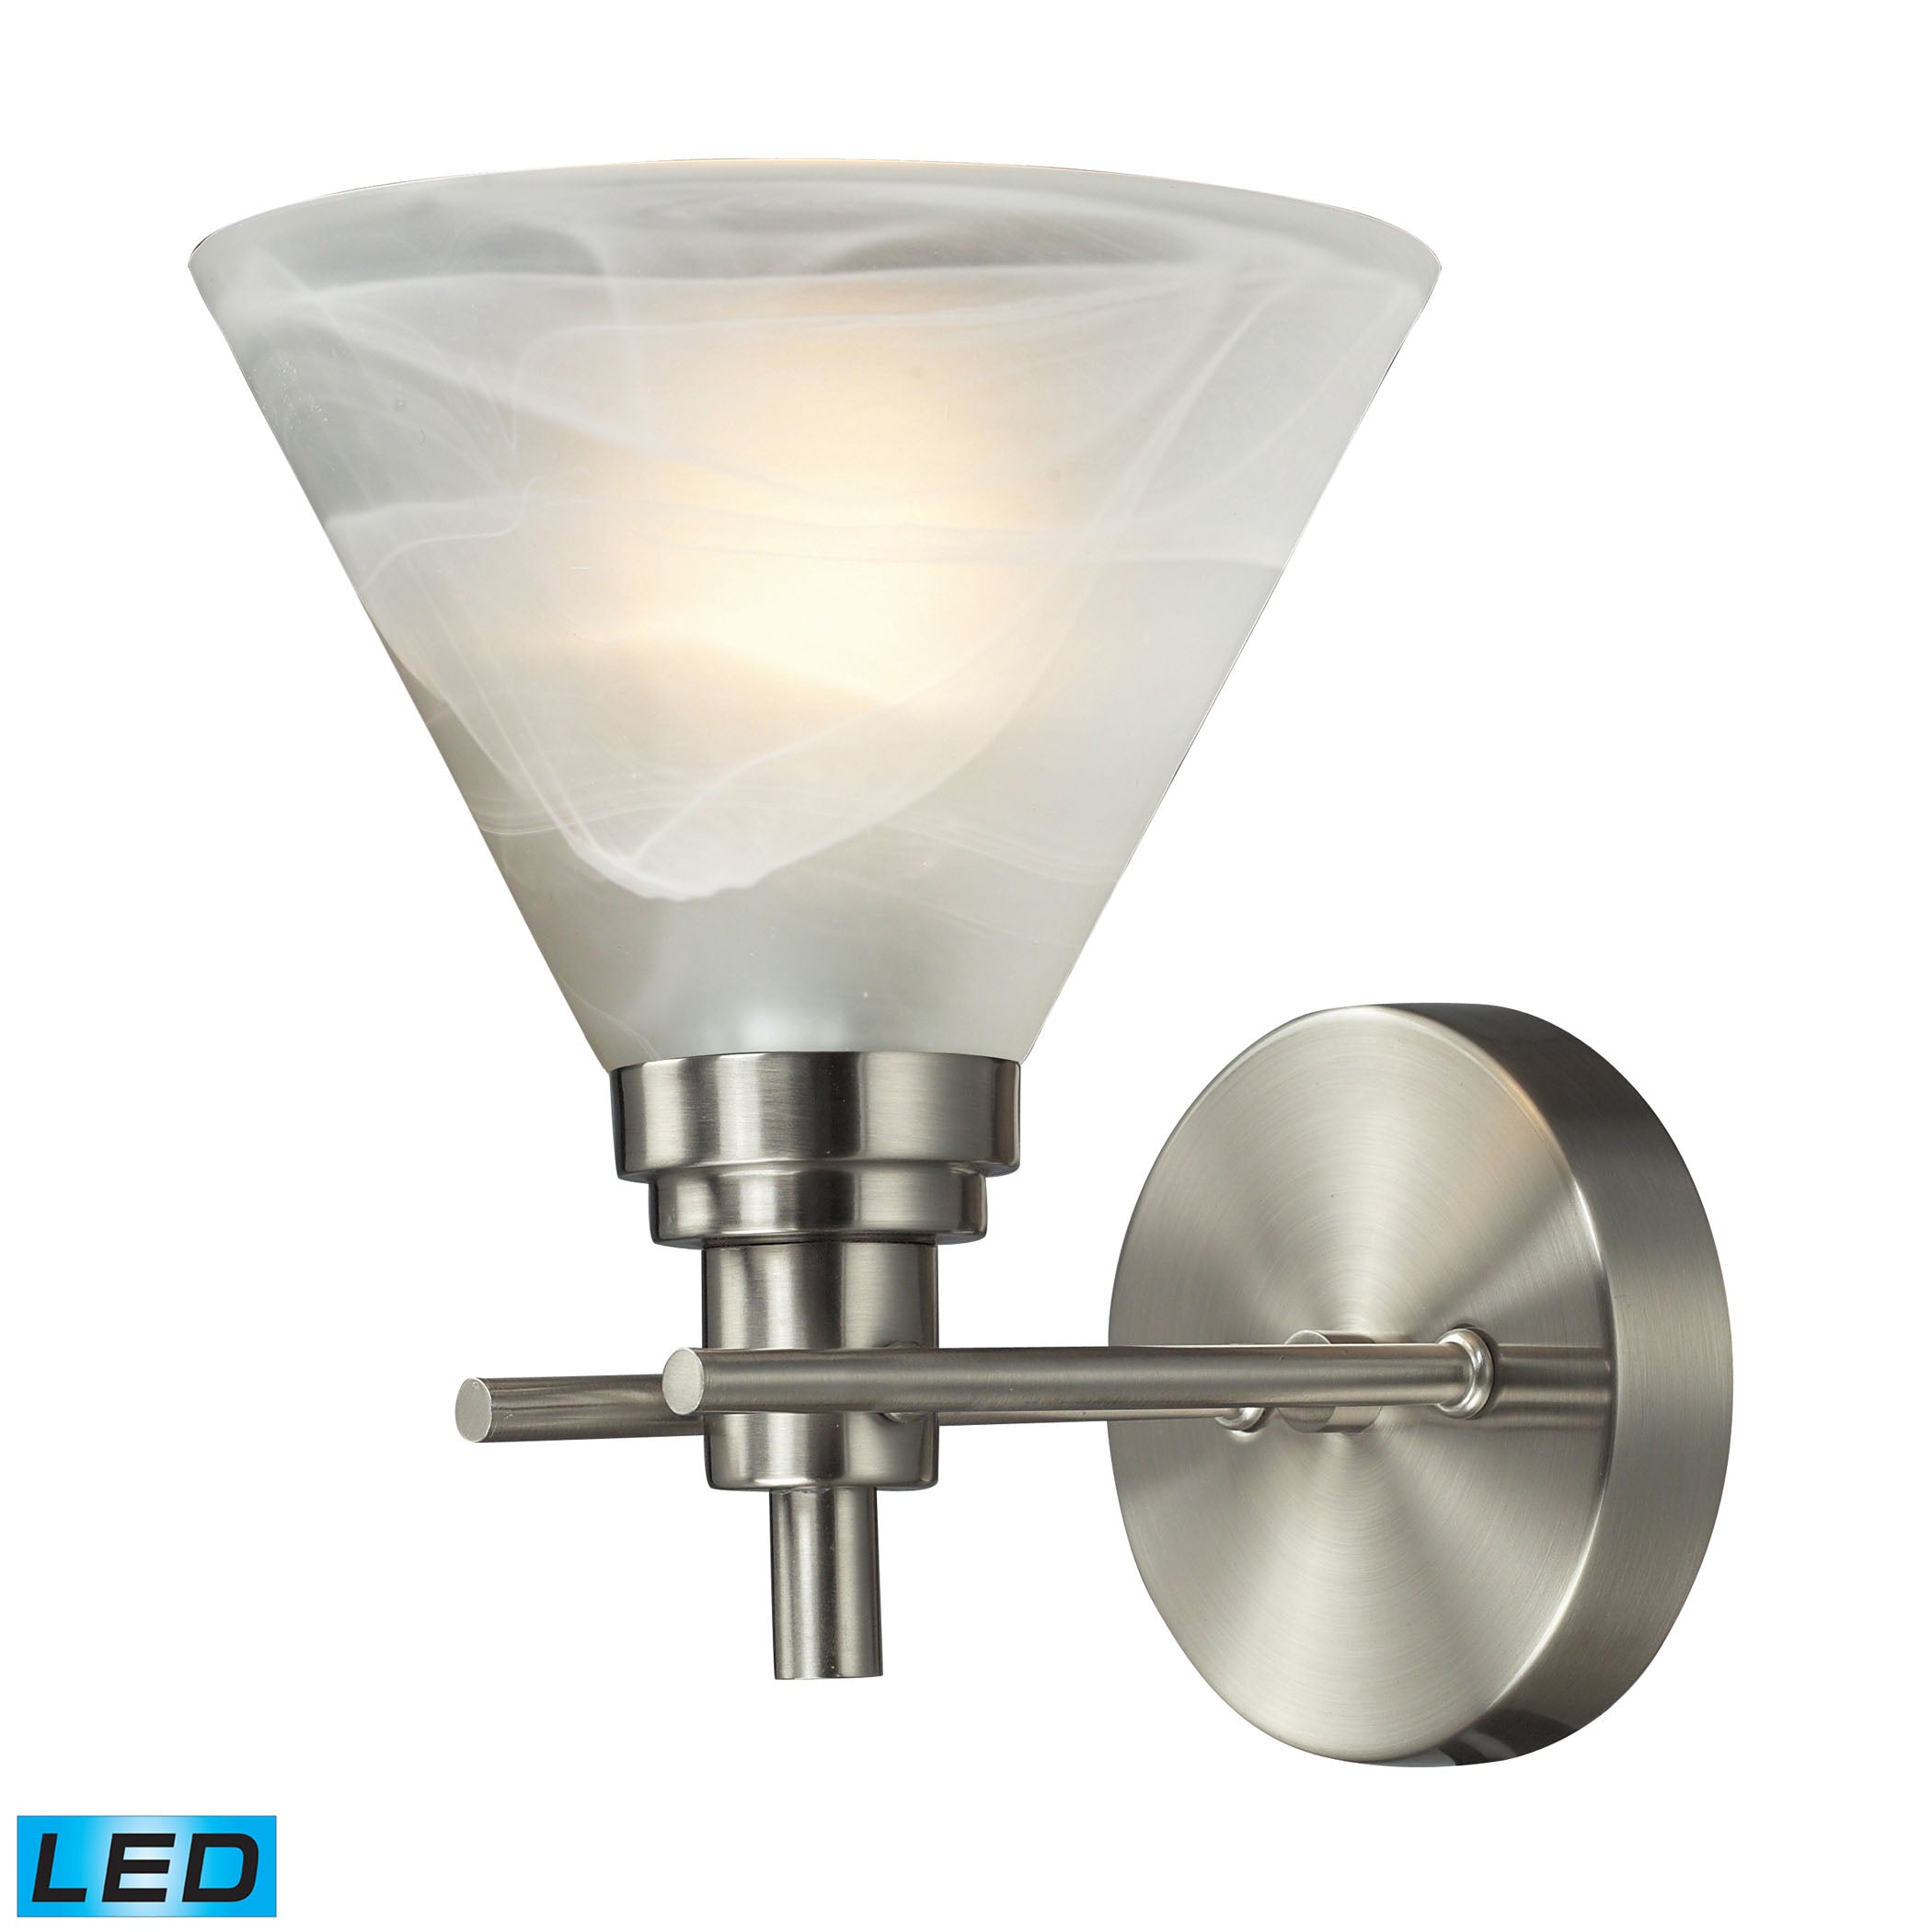 ELK Lighting 11400/1-LED Pemberton 1-Light Vanity Lamp in Brushed Nickel with White Marbleized Glass - Includes LED Bulb